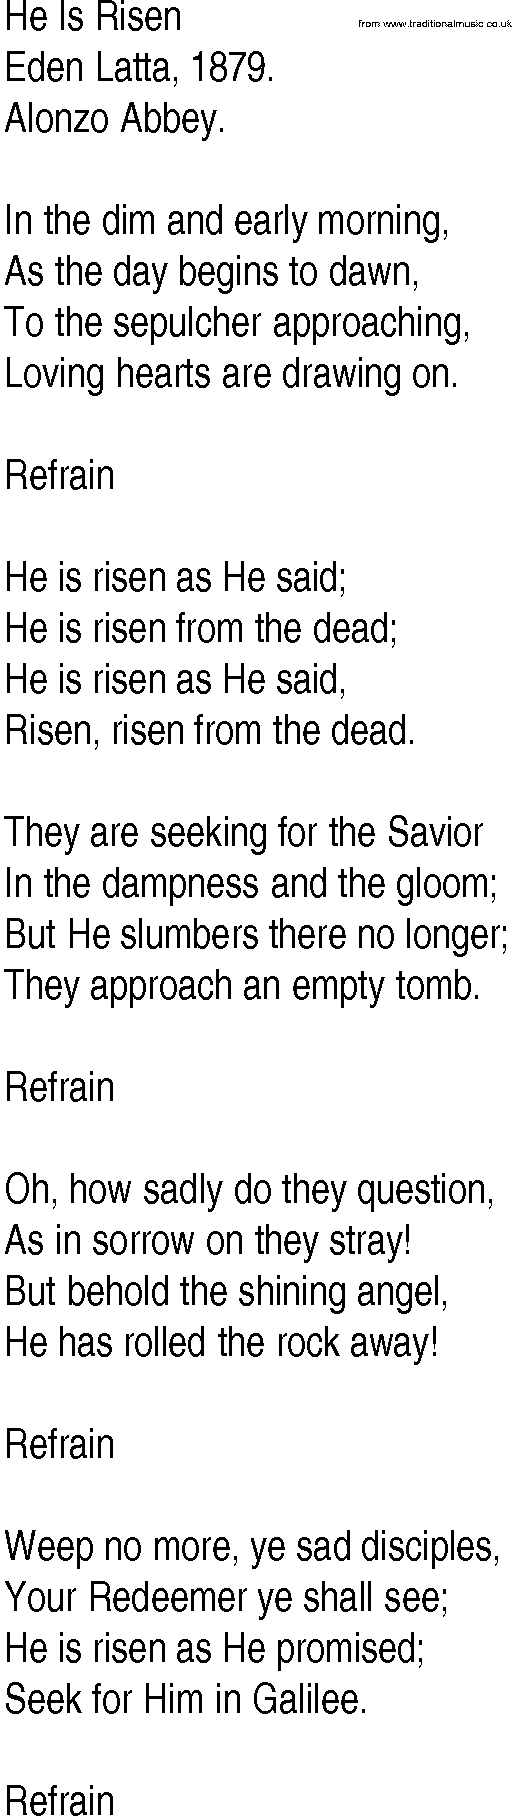 Hymn and Gospel Song: He Is Risen by Eden Latta lyrics